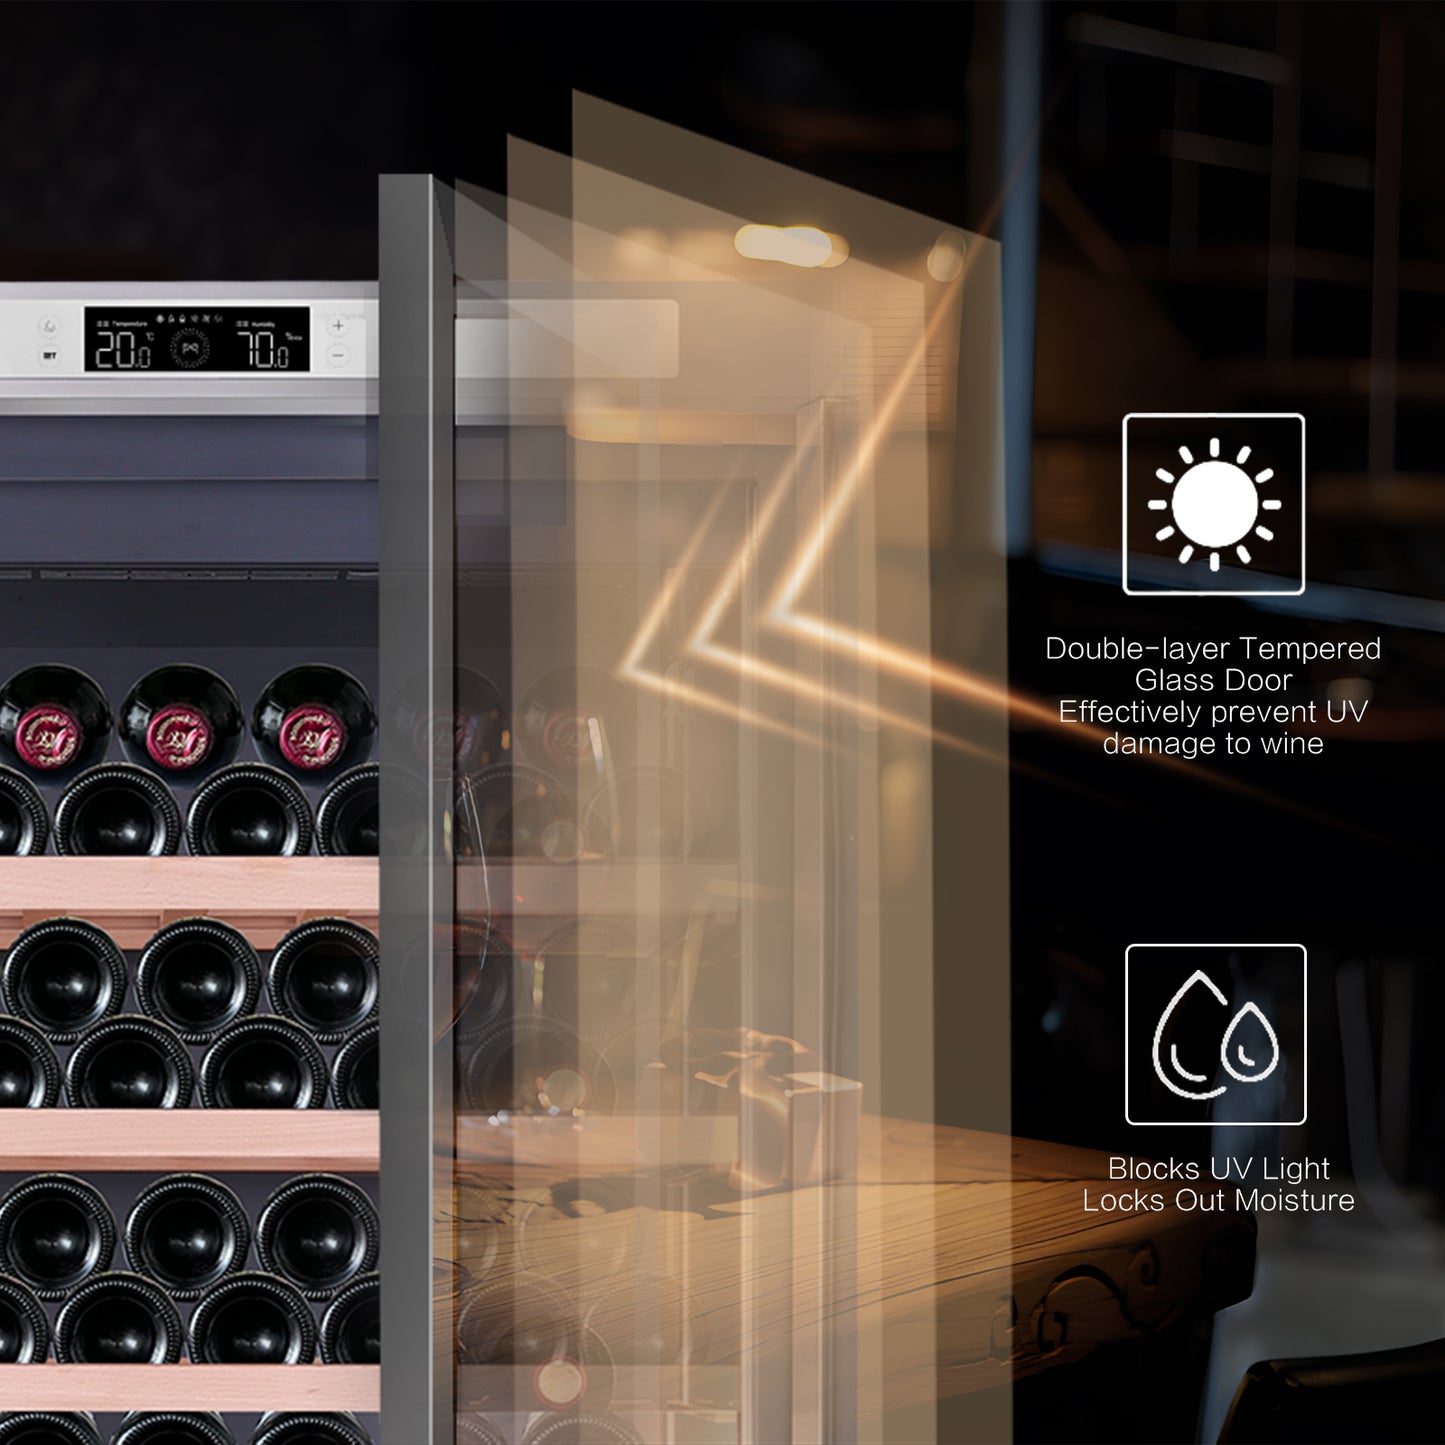 ZIEUN 357L Wine Cooler Refrigerator